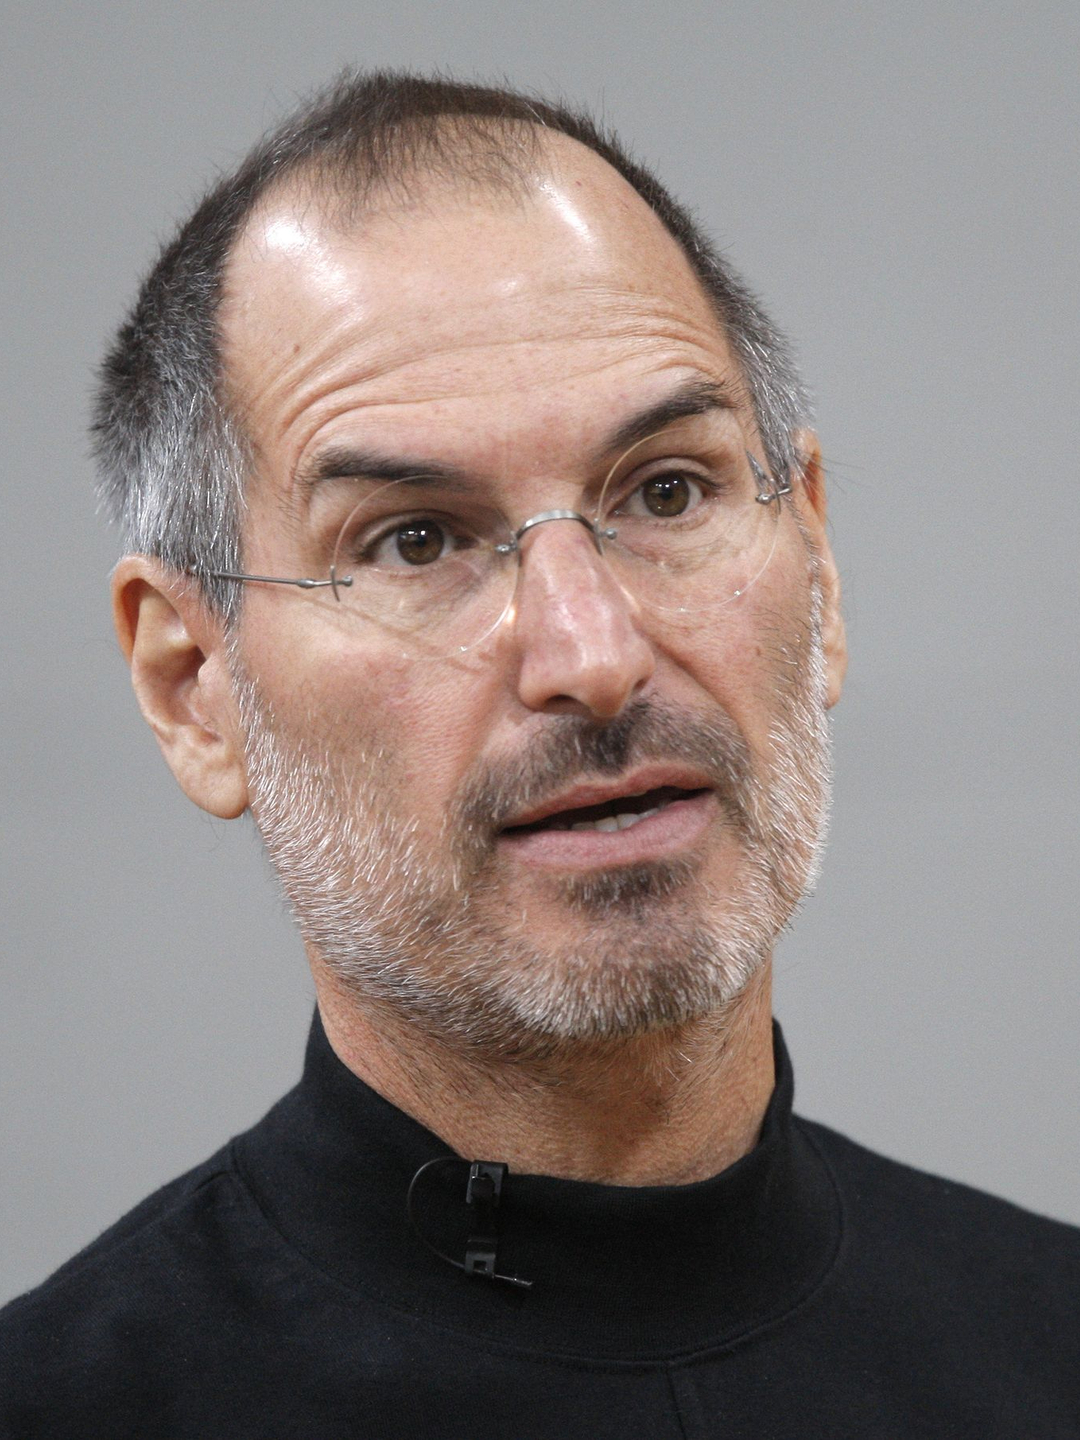 Steve Jobs the last photo